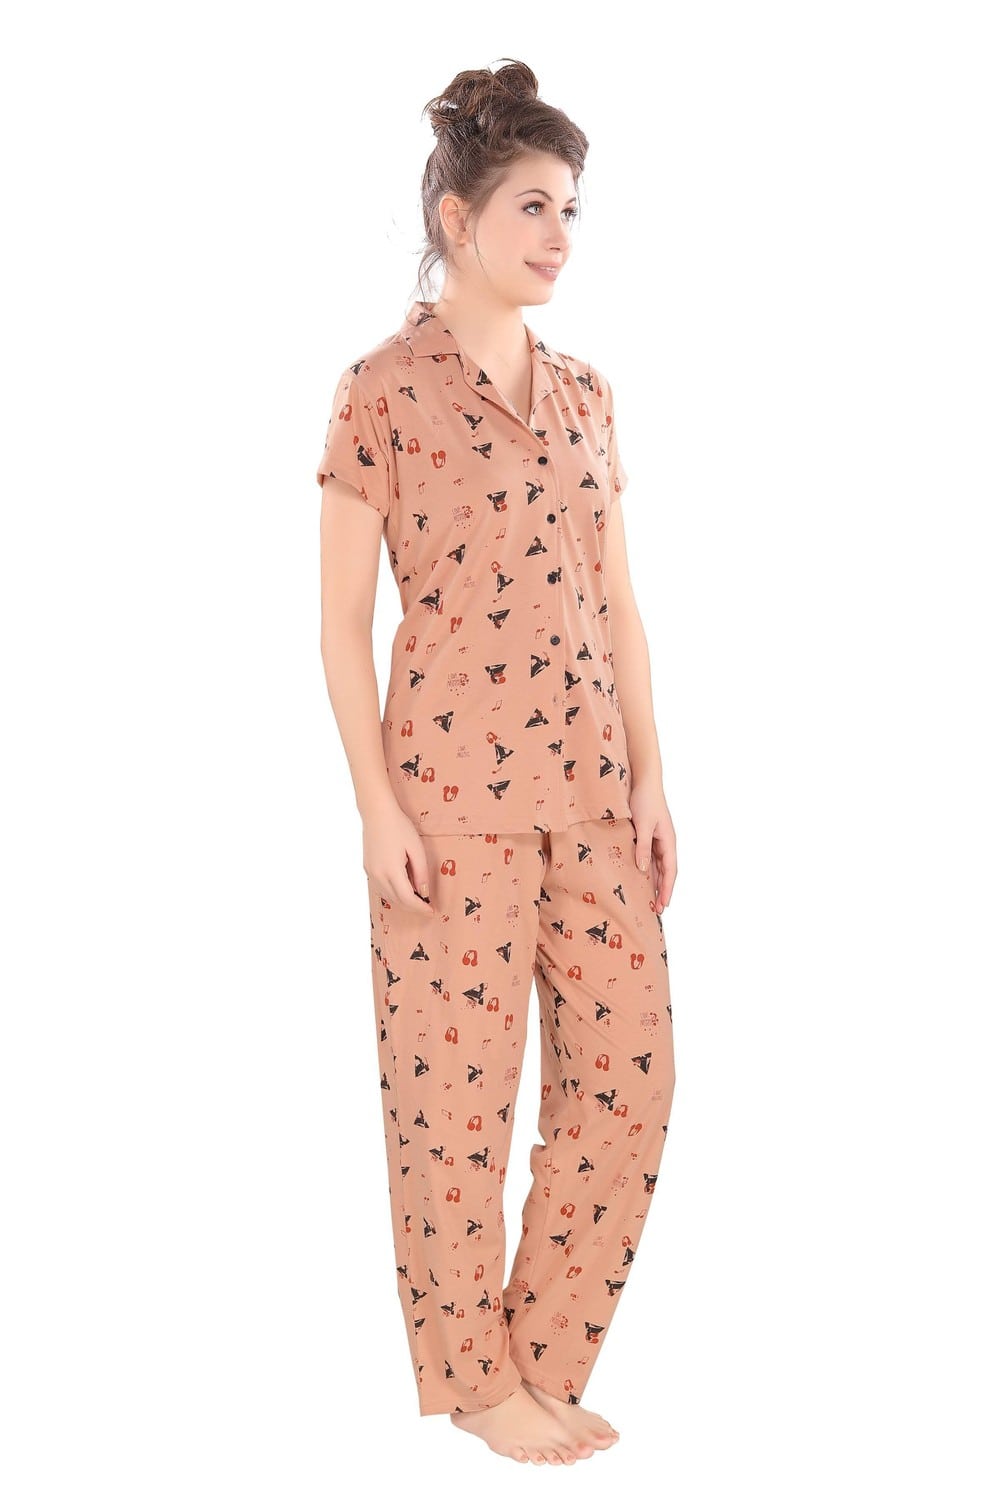 Pierre Donna Women's Cotton Pajama set With Pants - Women Sleepwear Beige Color AVL - Dealz Souq